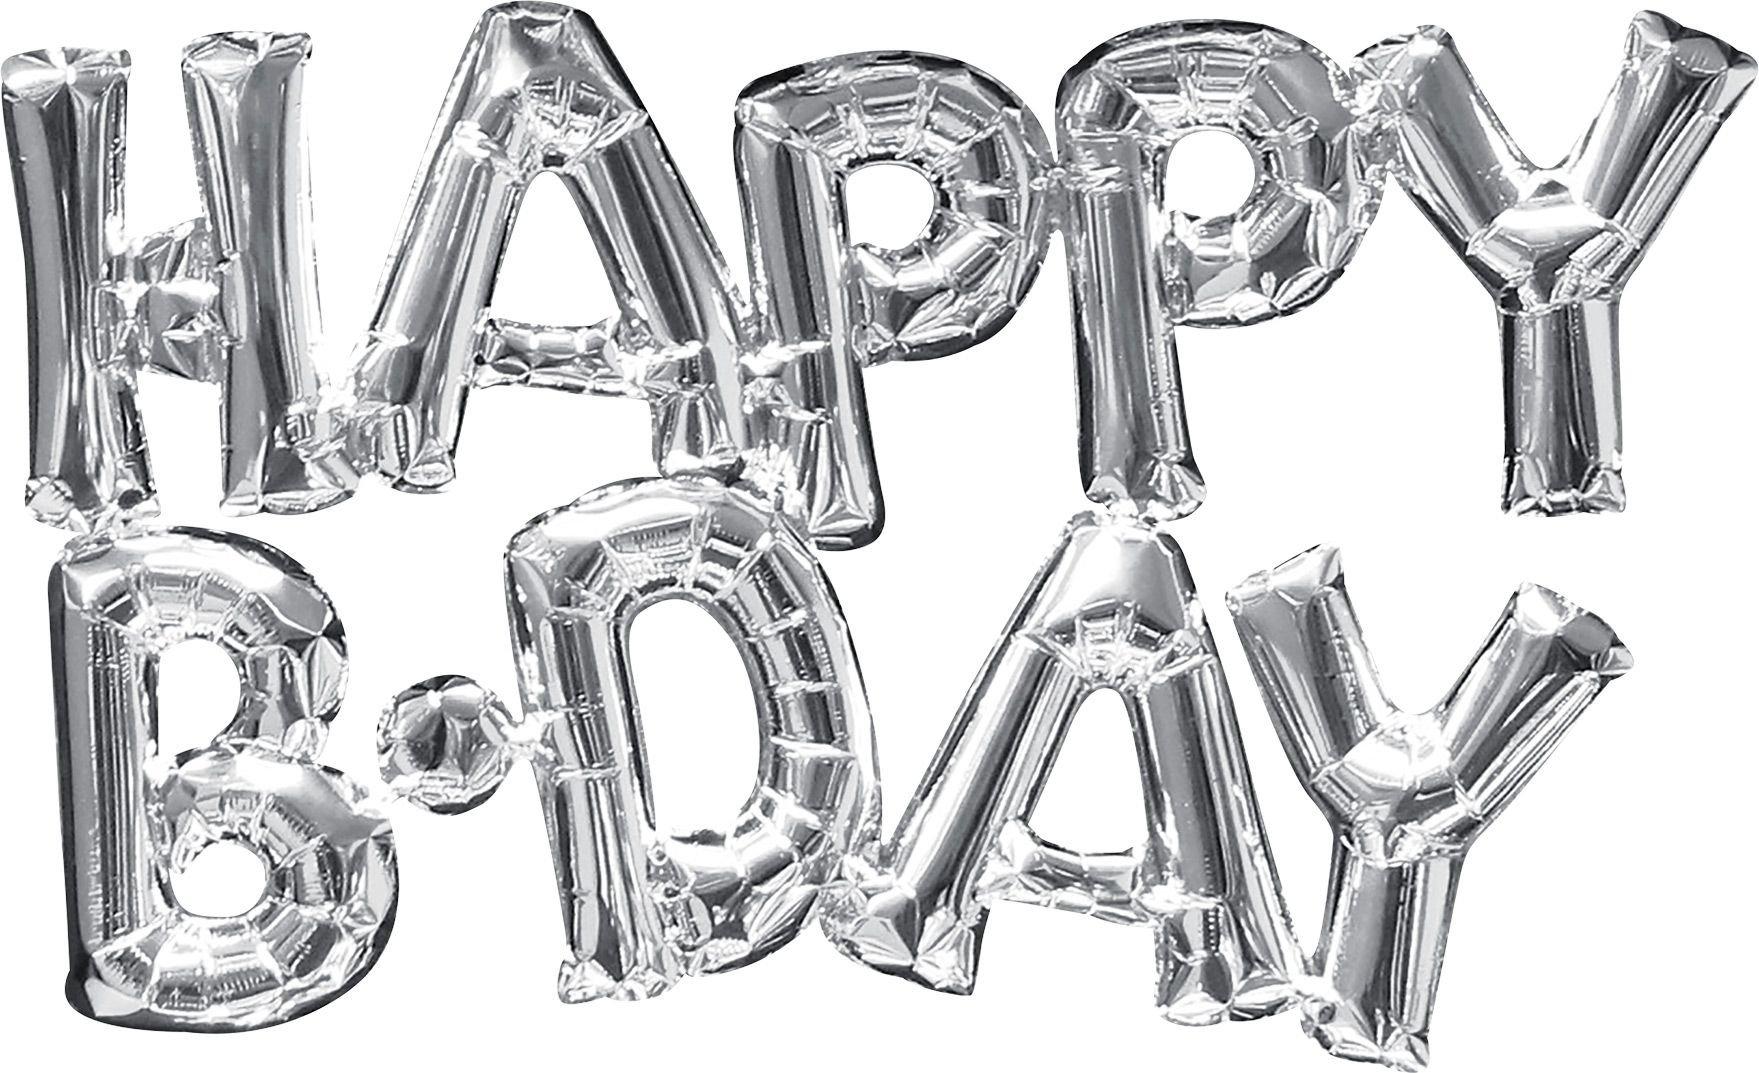 Air-Arrangement® Happy Birthday Balloons